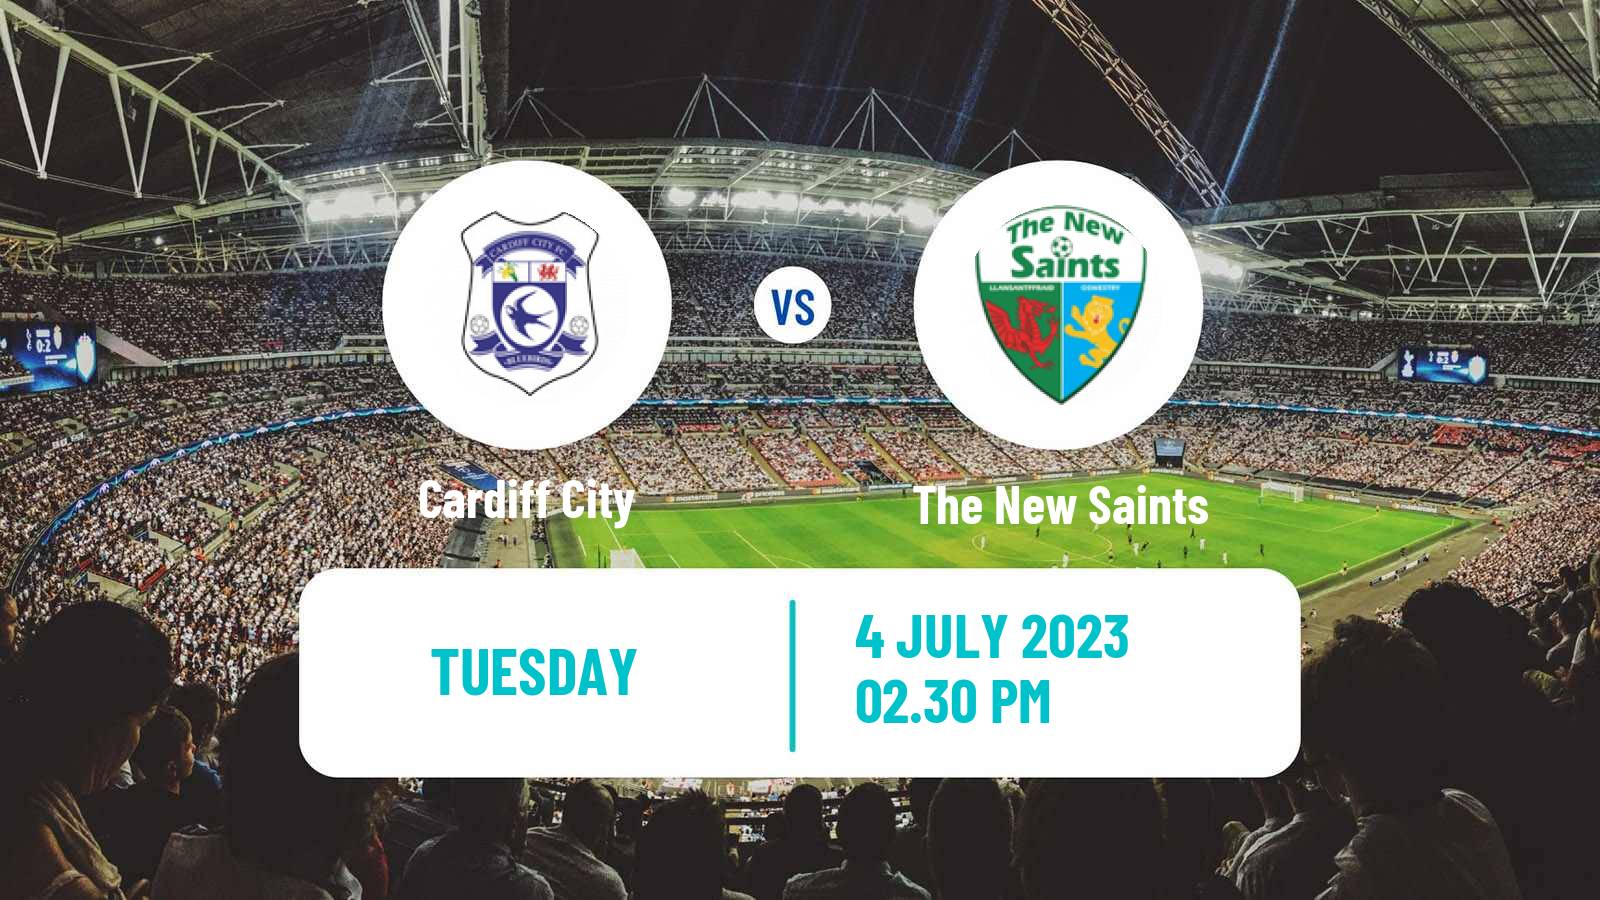 Soccer Club Friendly Cardiff City - The New Saints